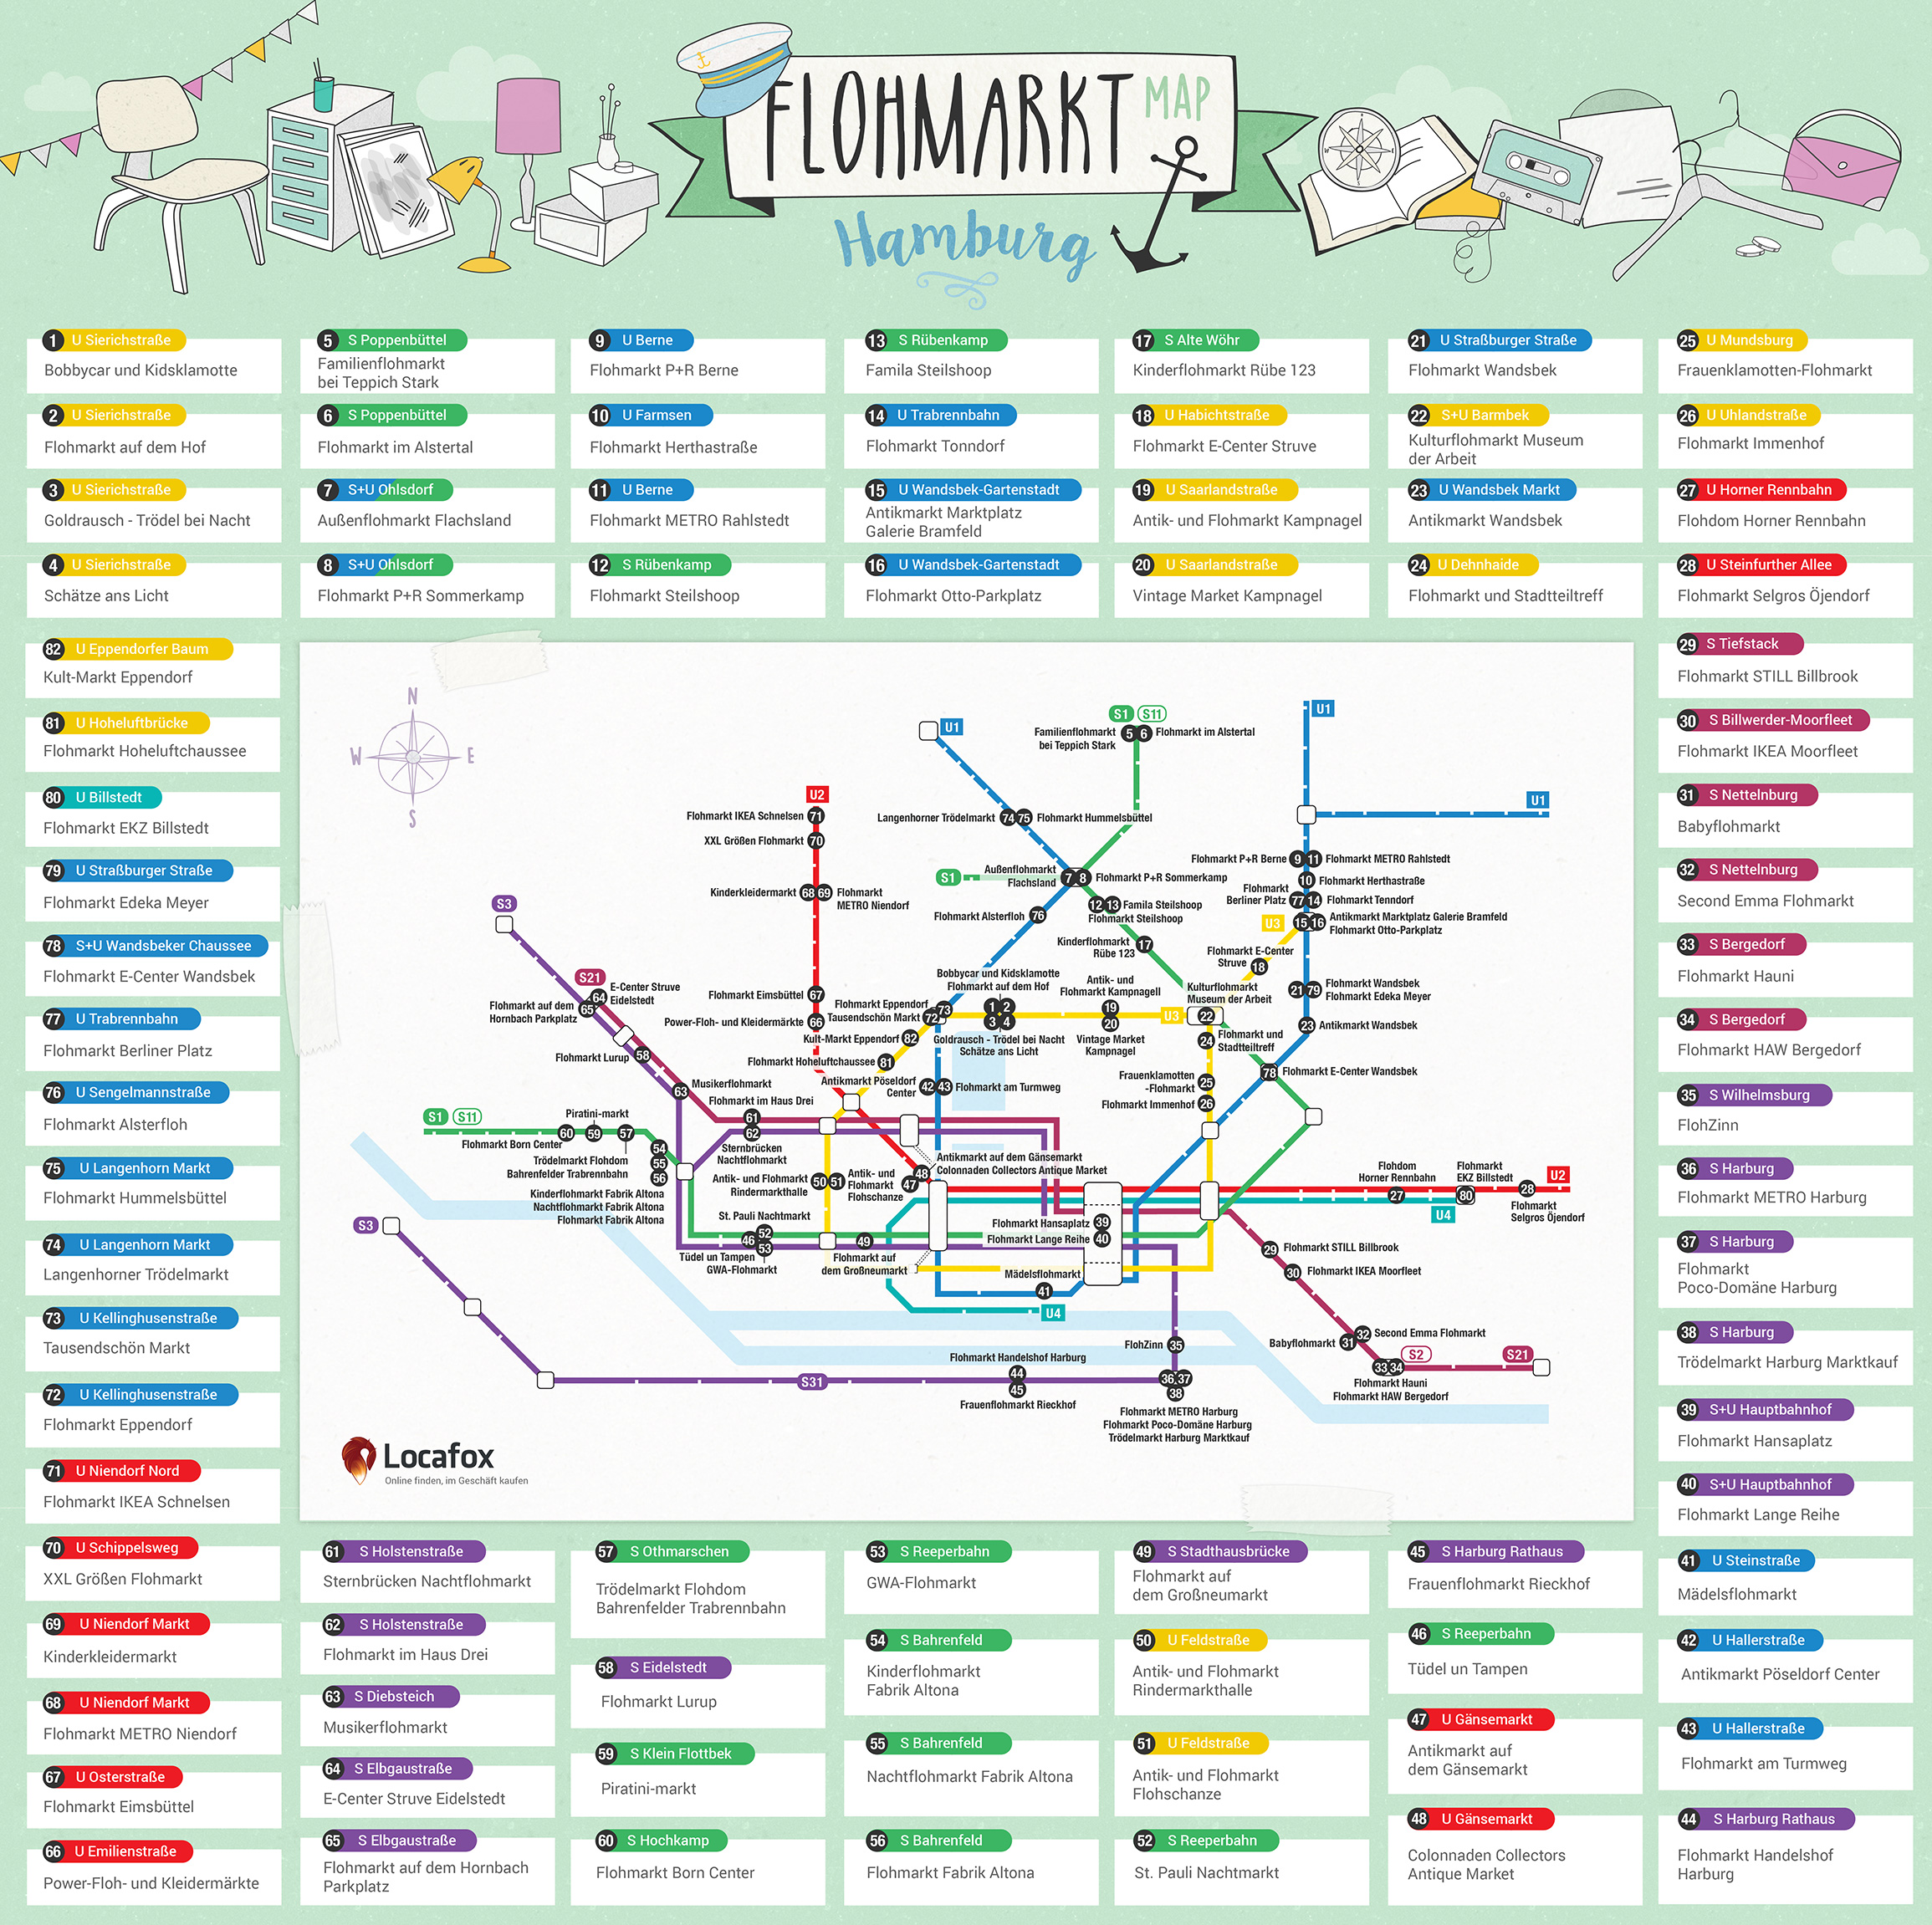 https://www.locafox.de/magazin/flohmarkt-map-hamburg